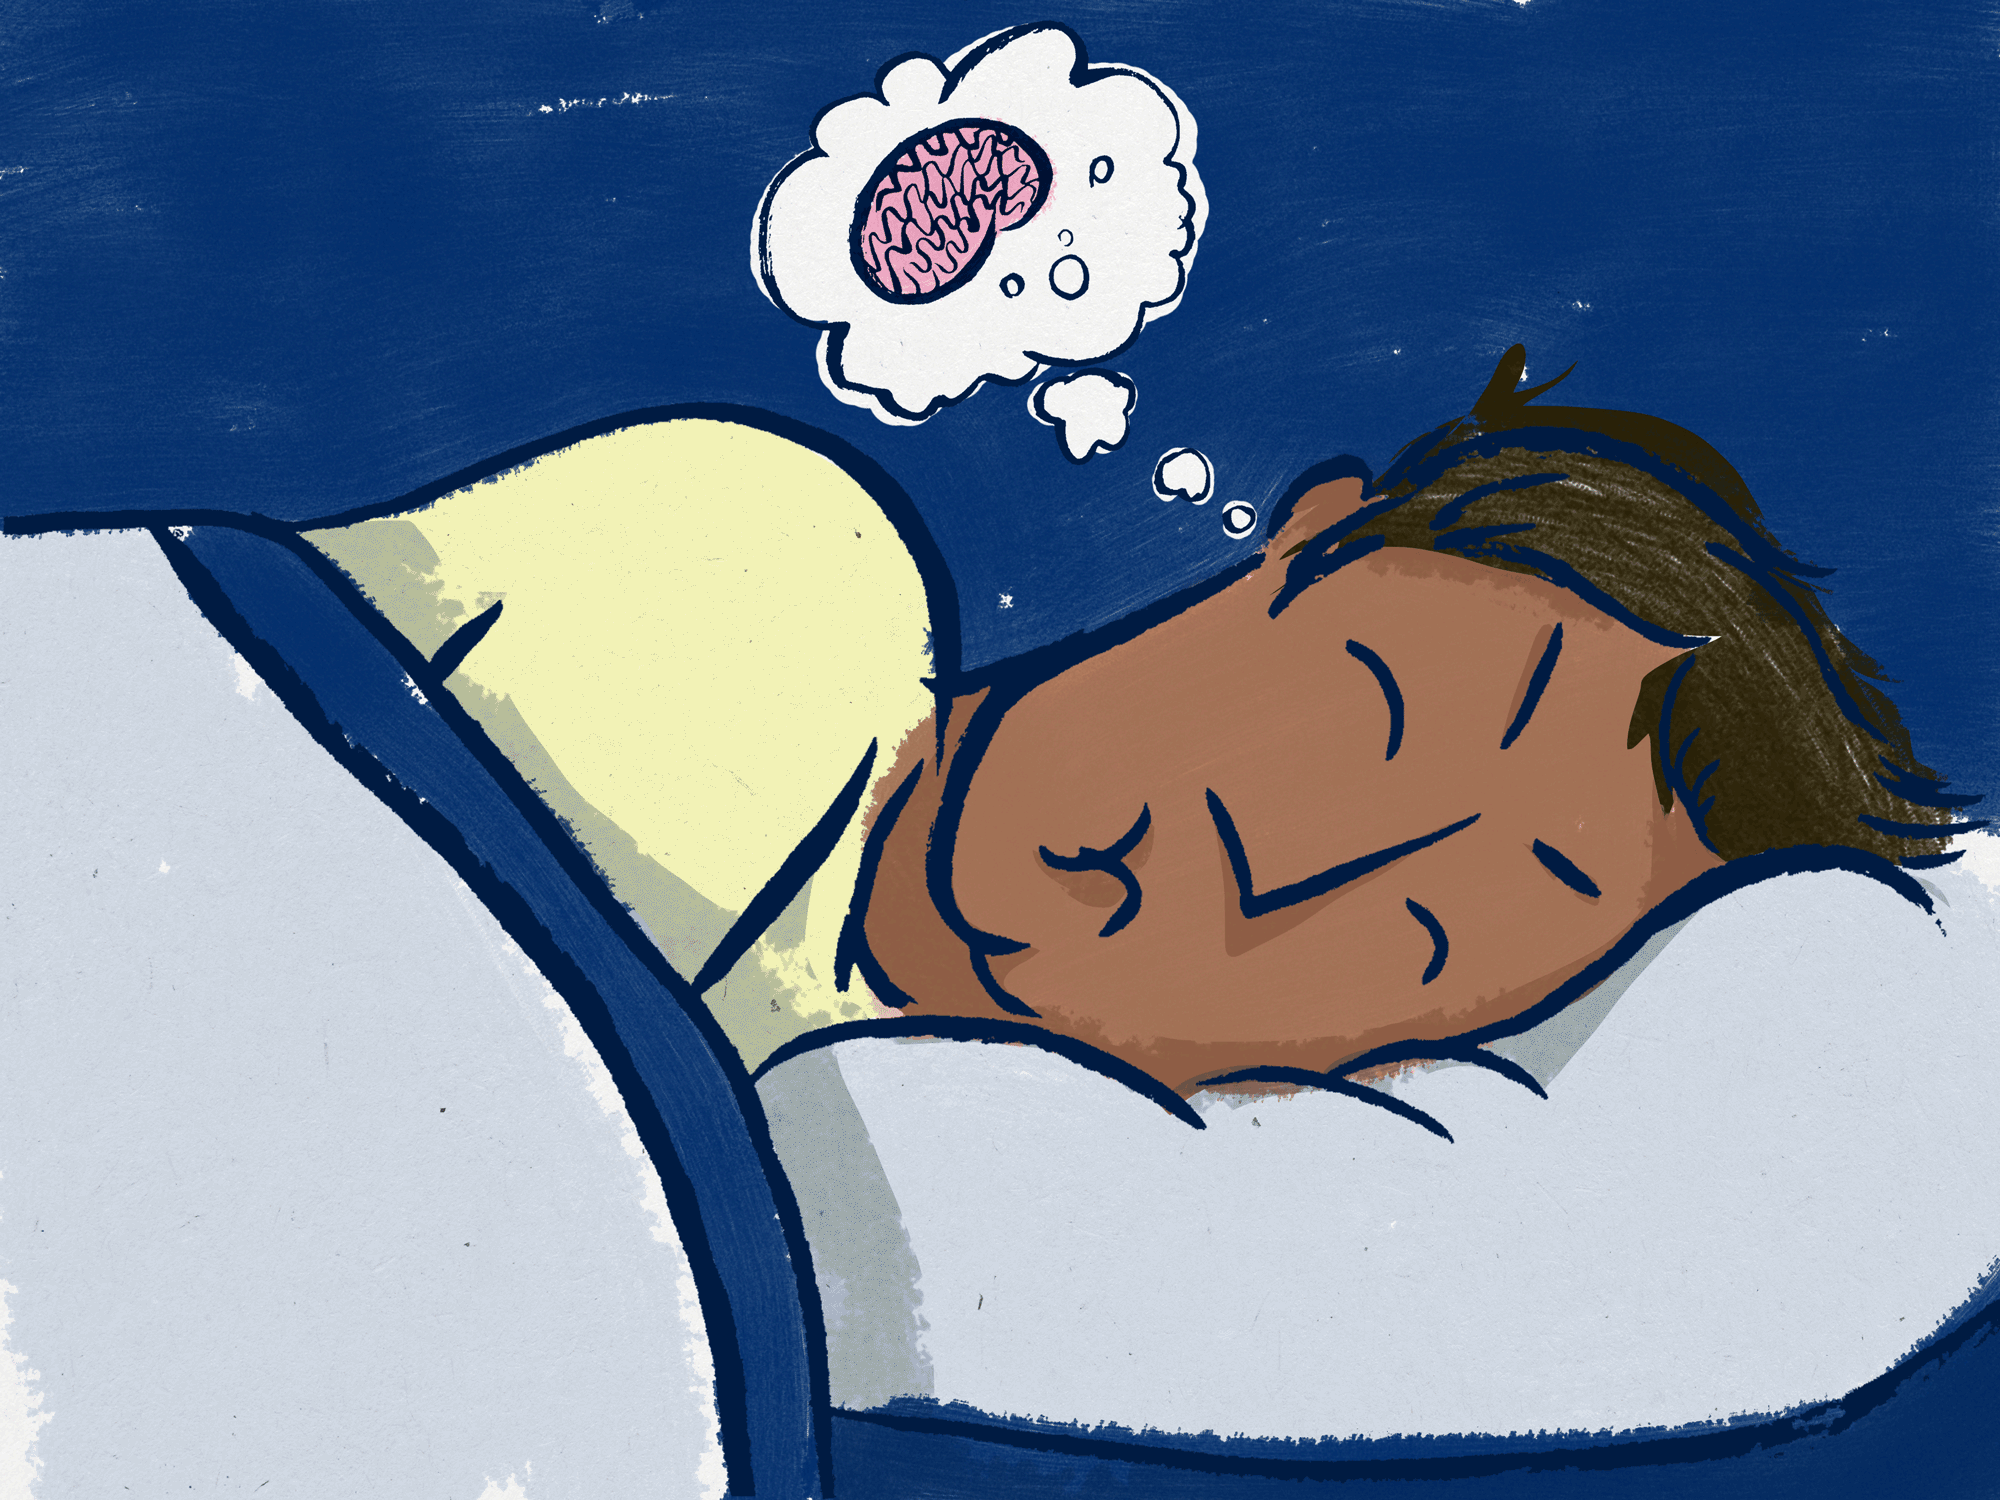 Sleeping animation. Про сон. Сон иллюстрация. Сон картинки. Здоровый сон.